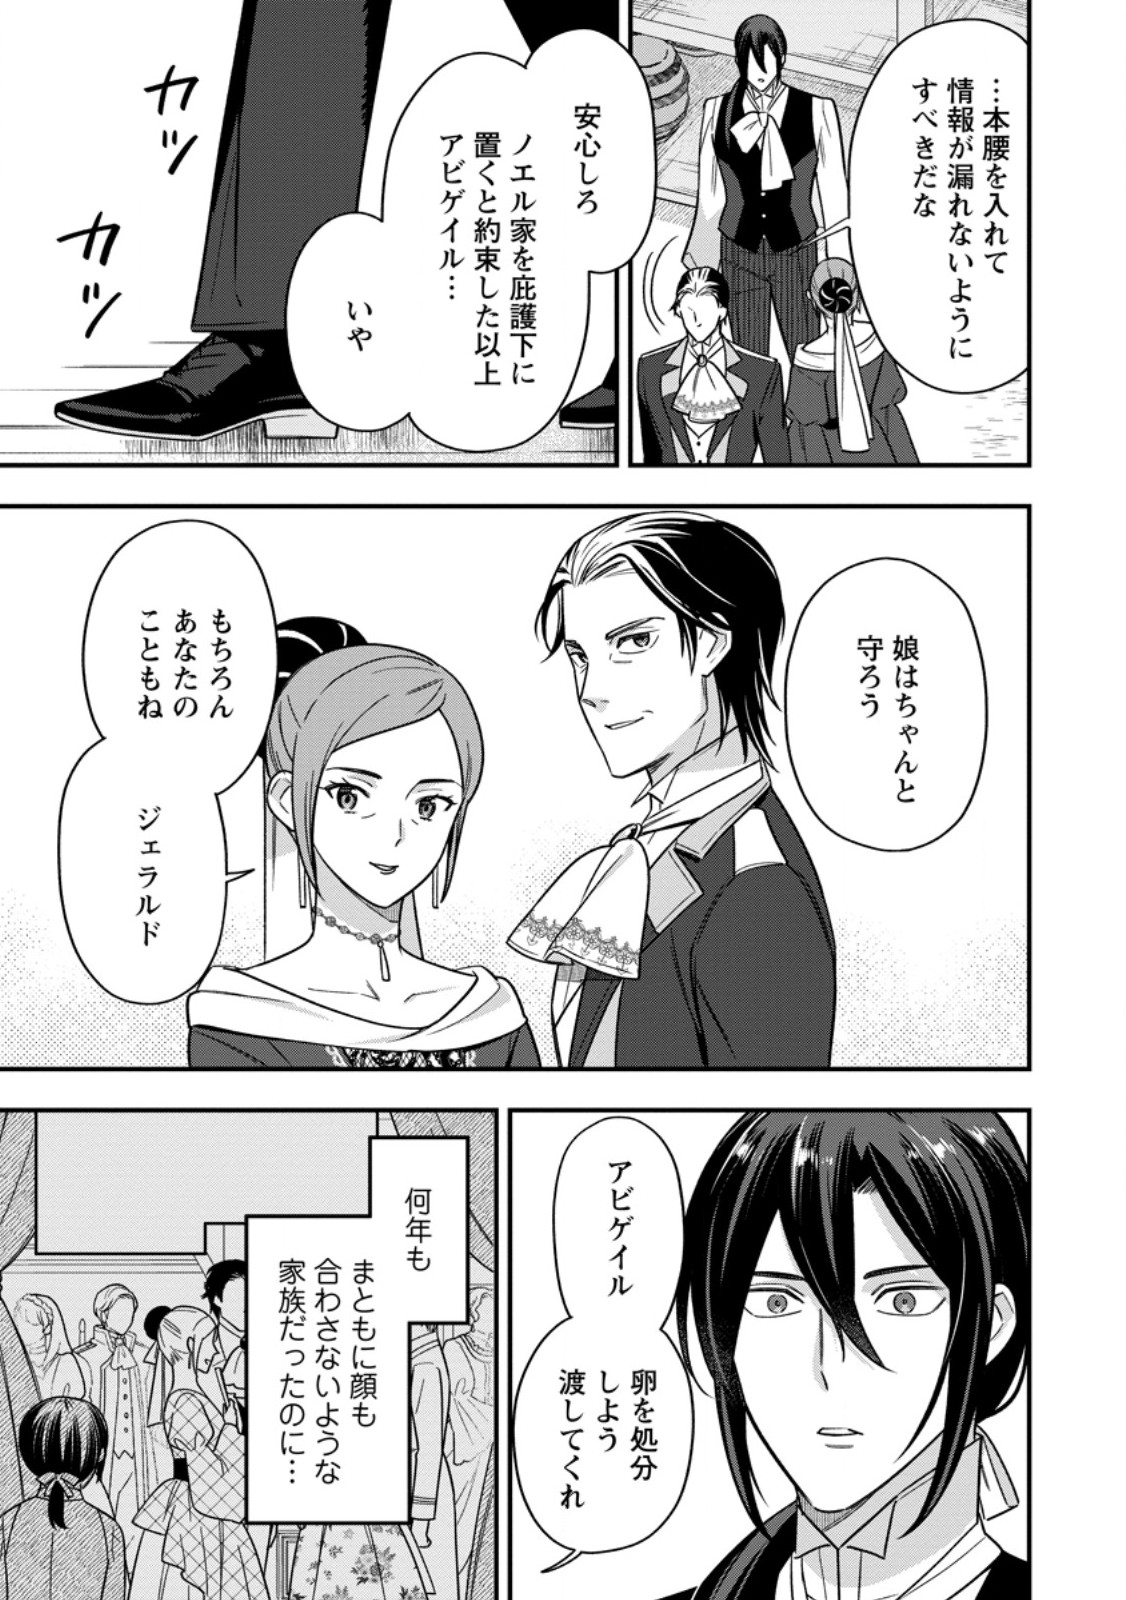 Aisanai to Iwaremashite mo - Chapter 9.3 - Page 9